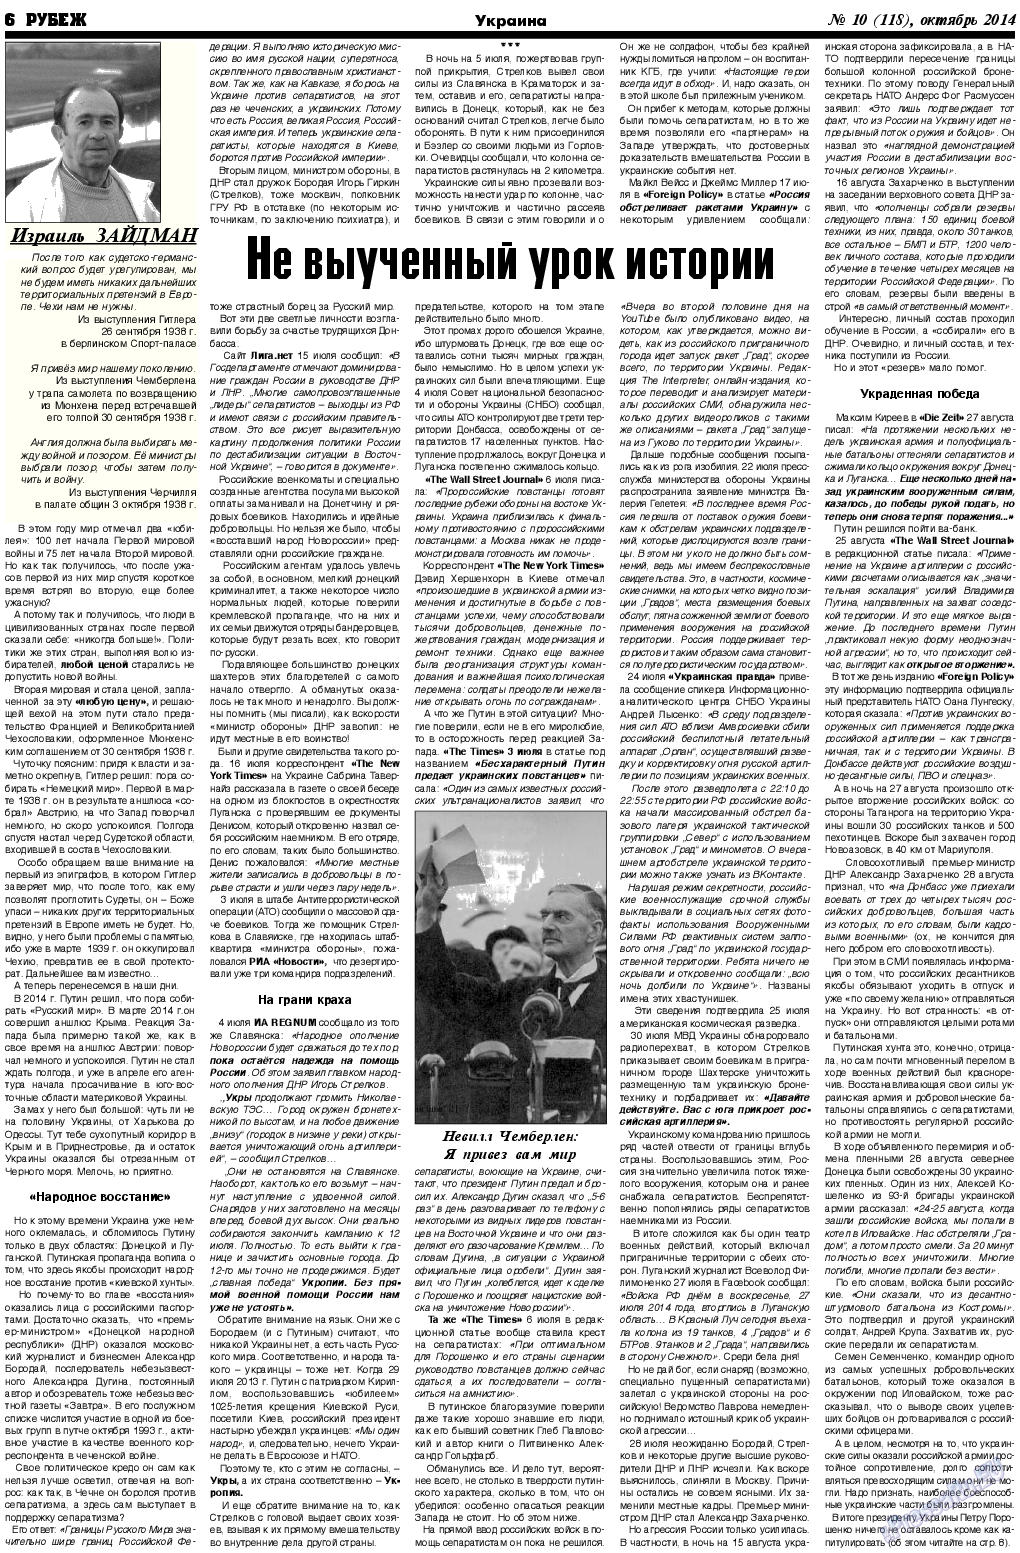 Рубеж, газета. 2014 №10 стр.6